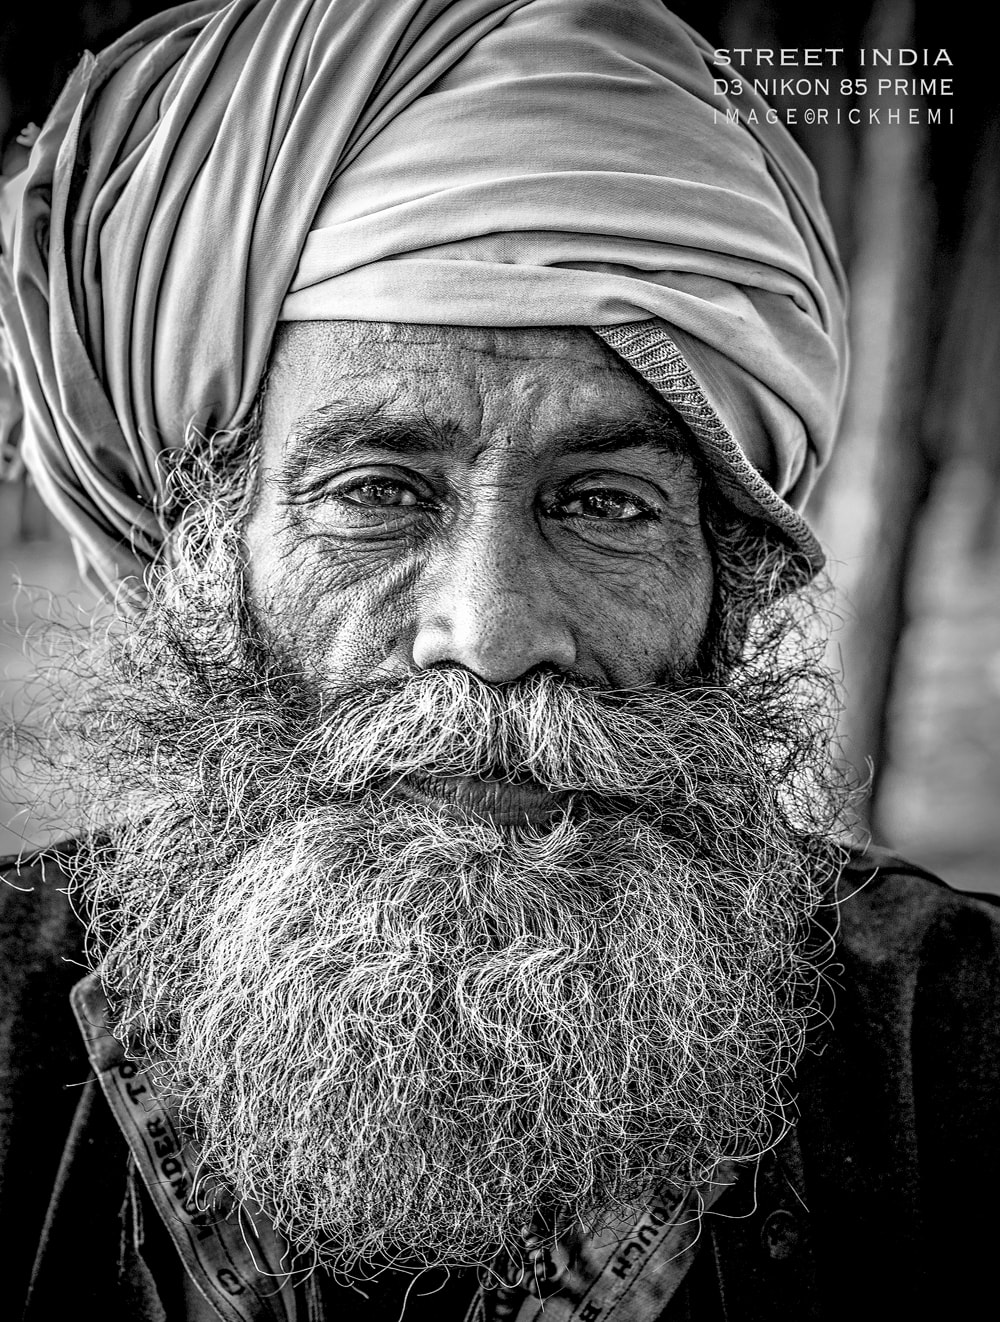 solo overland travel India, random street photography, DSLR D3 street portrait image by Rick Hemi